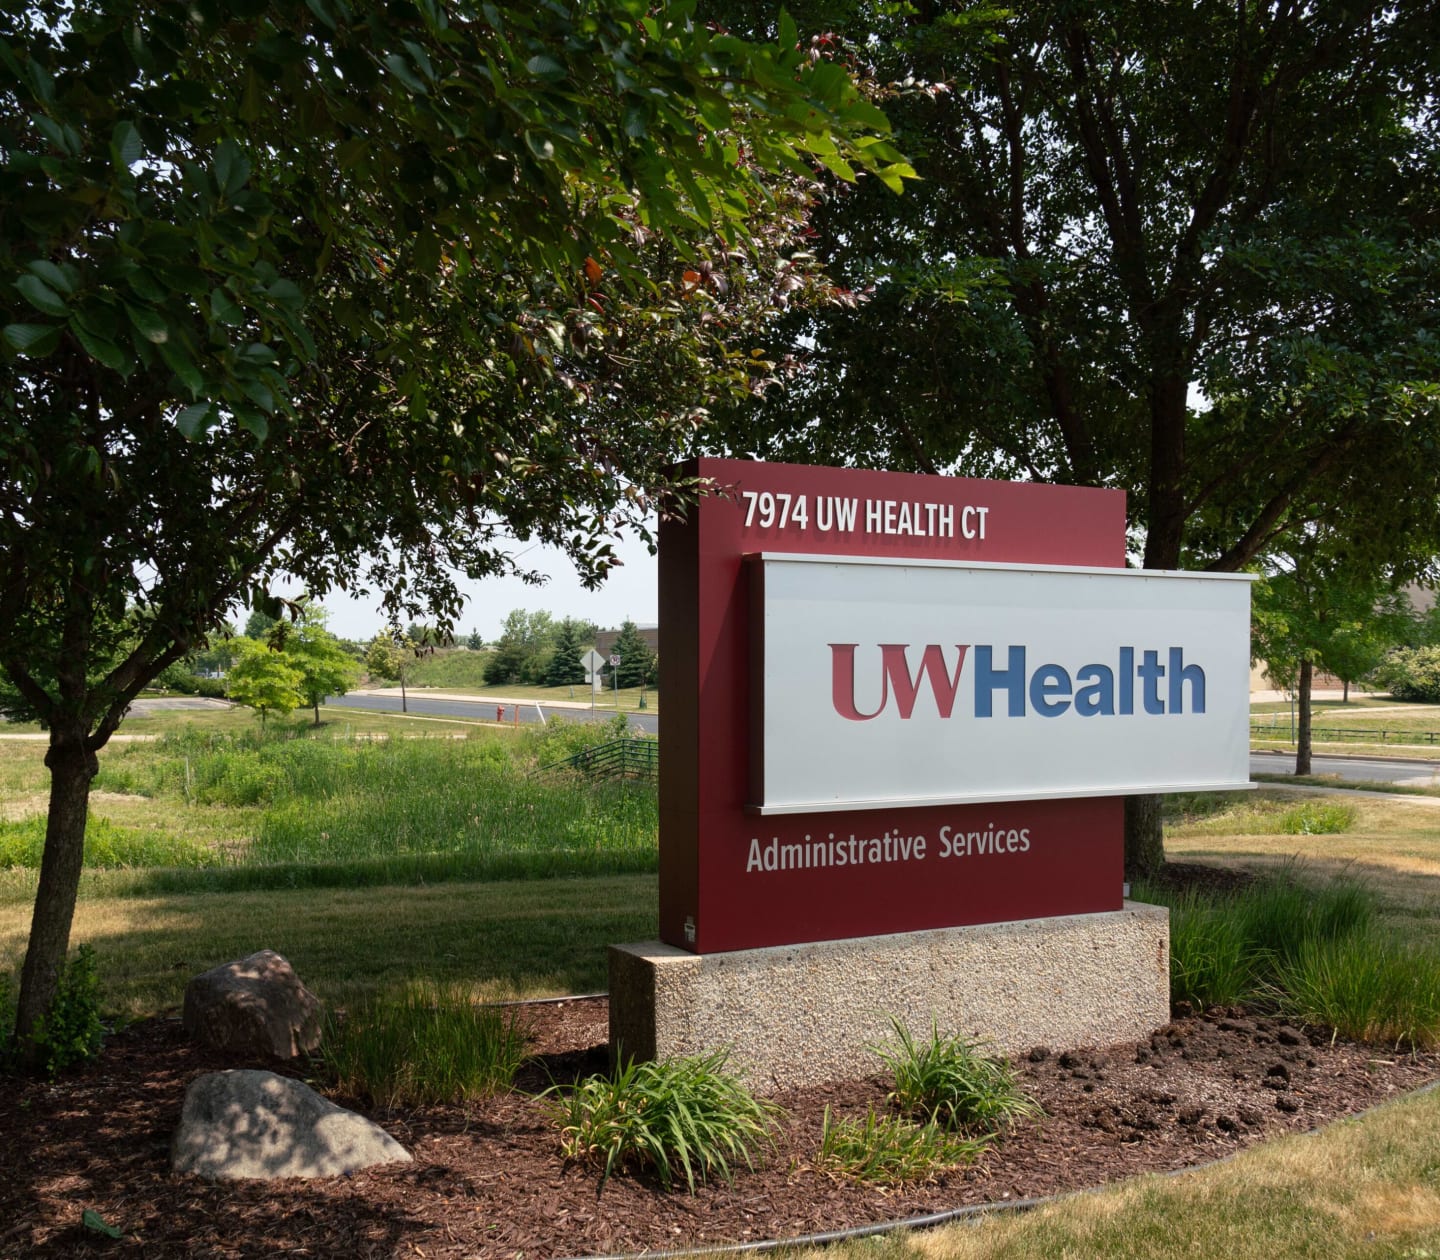 Exterior signage for UW Health 7974 UW Health Ct administrative building